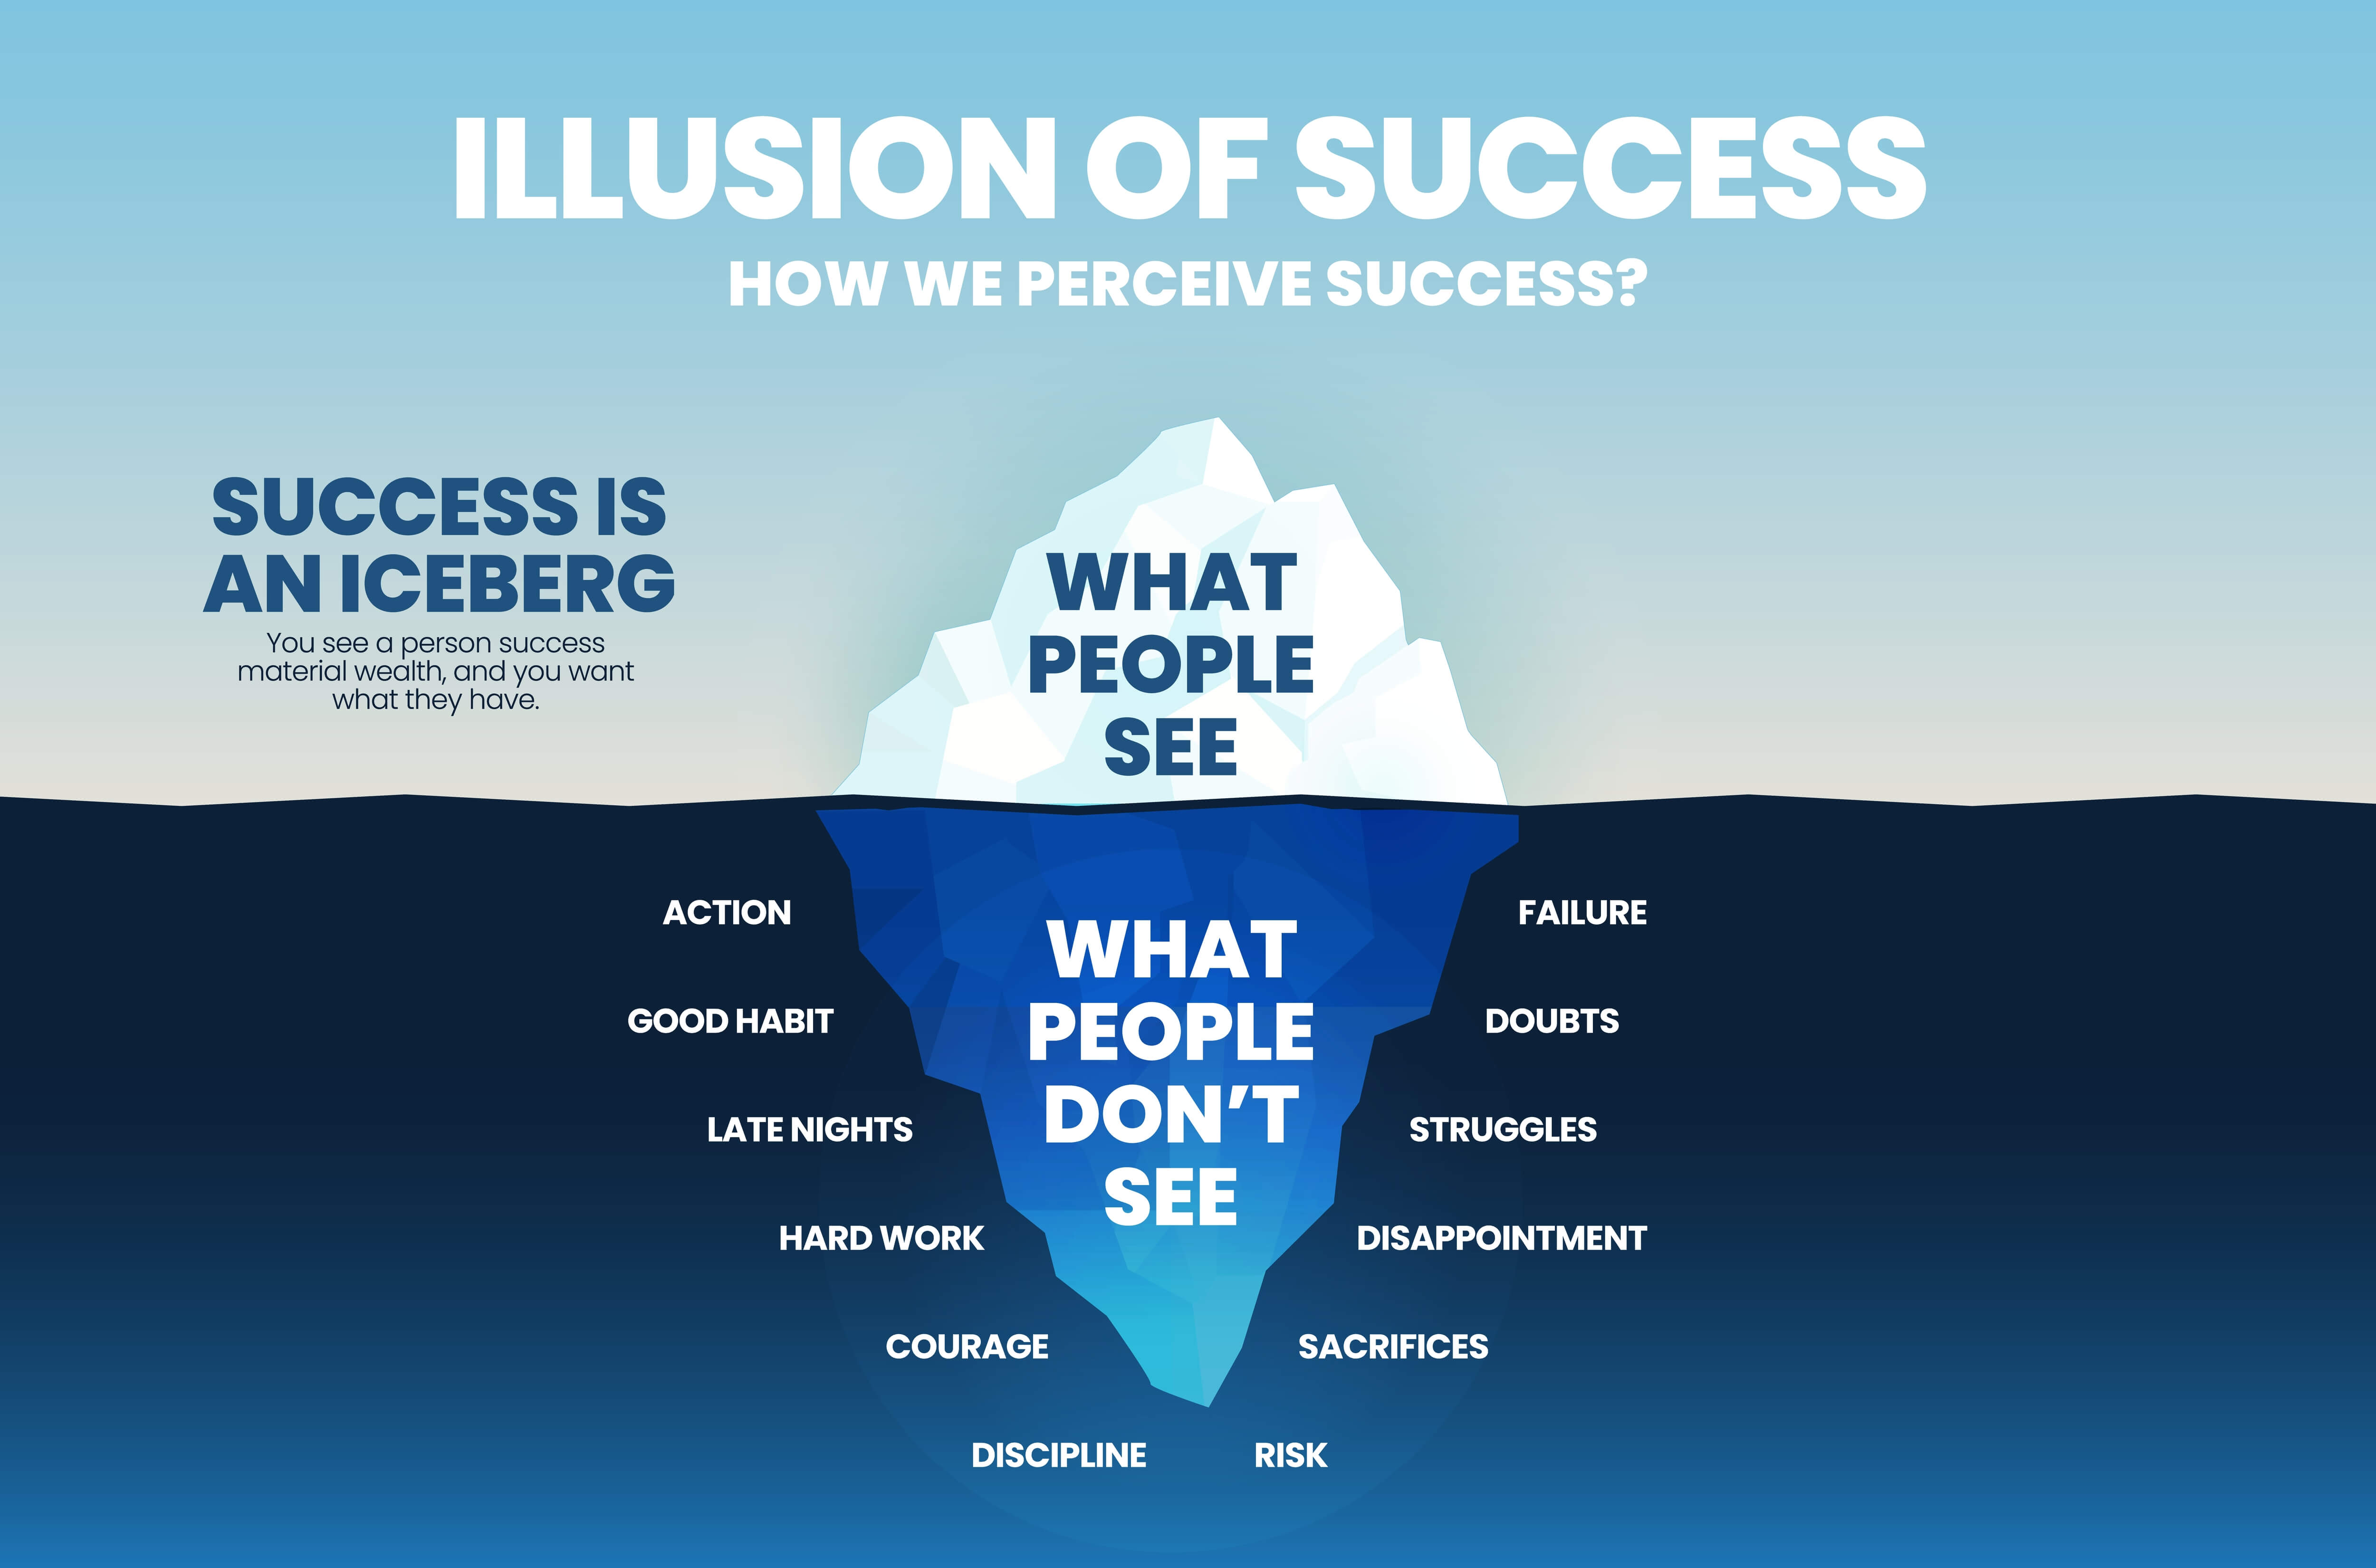 Illusion of Success infographic visualizing the iceberg metaphor